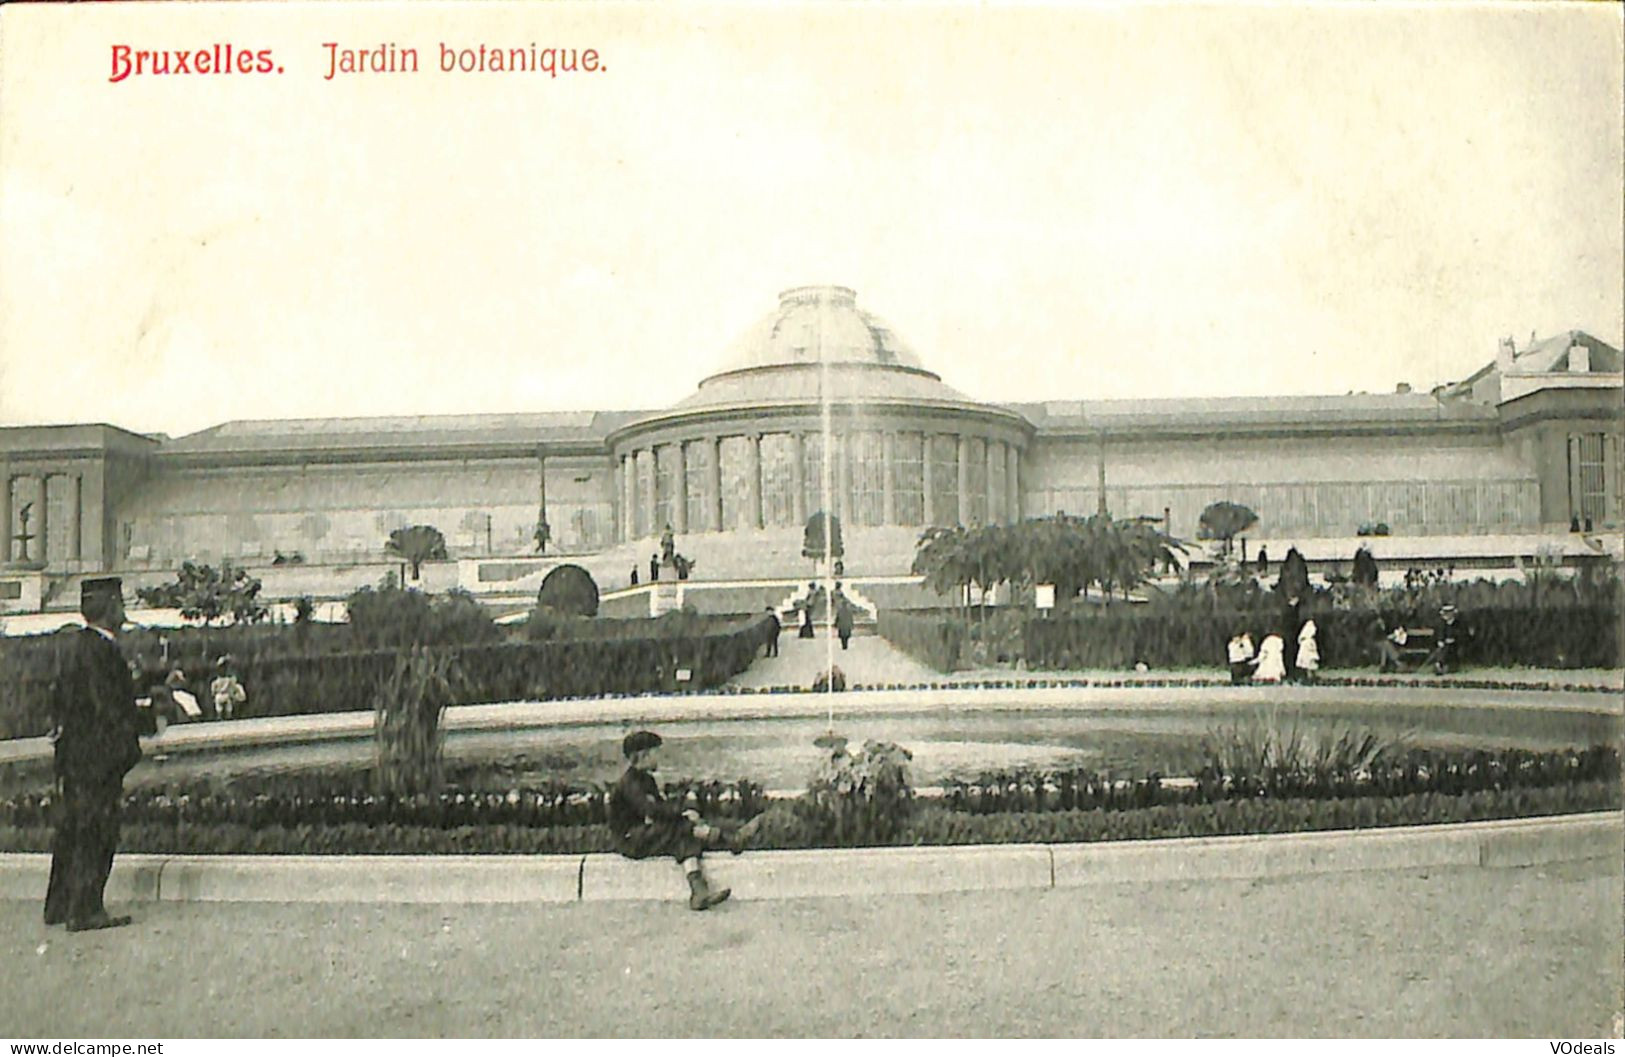 Belgique - Brussel - Bruxelles - Jardin Botanique - Parks, Gärten